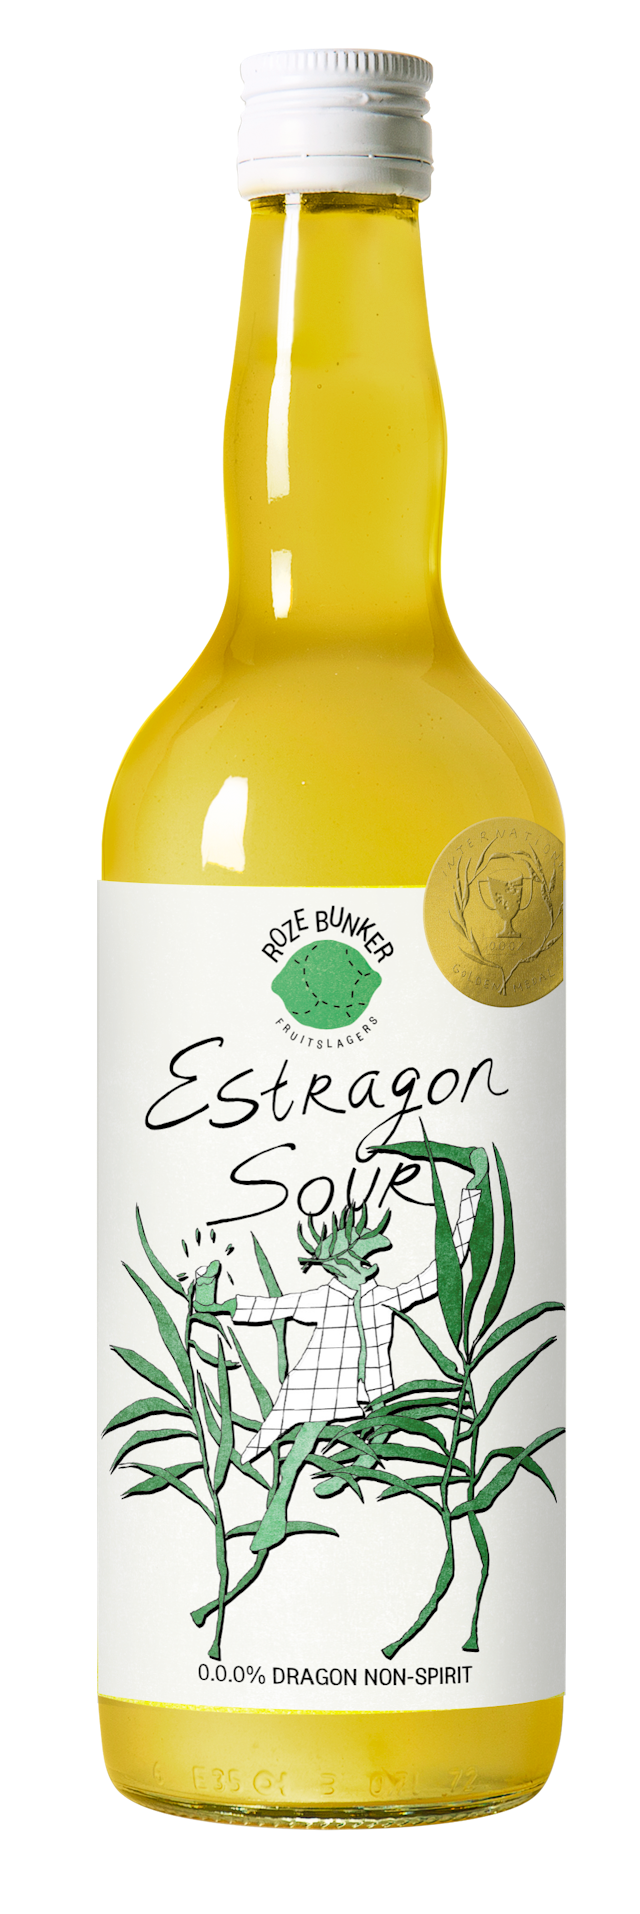 Bottle of estragon sour syrup by Roze Bunker